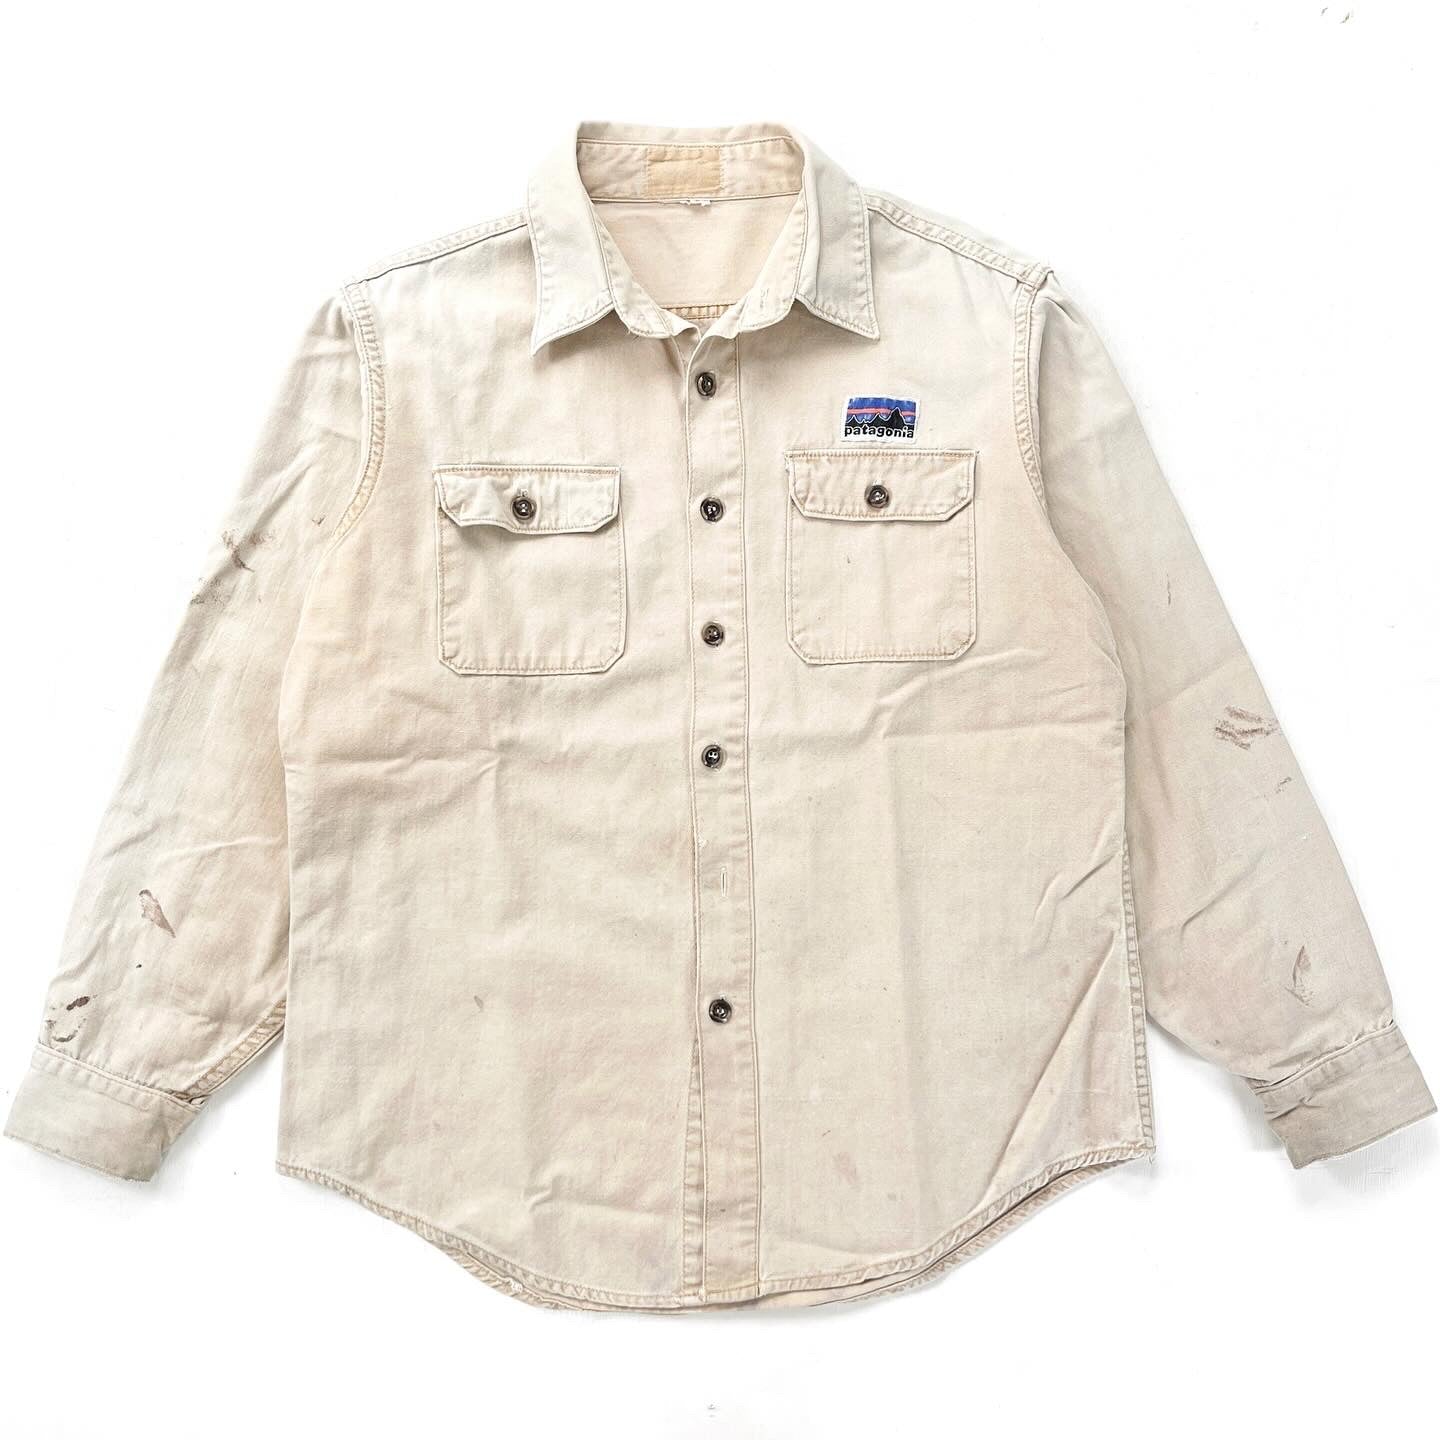 1970s Patagonia “Big Label” Original Cotton Canvas Shirt, Faded Tan (L)